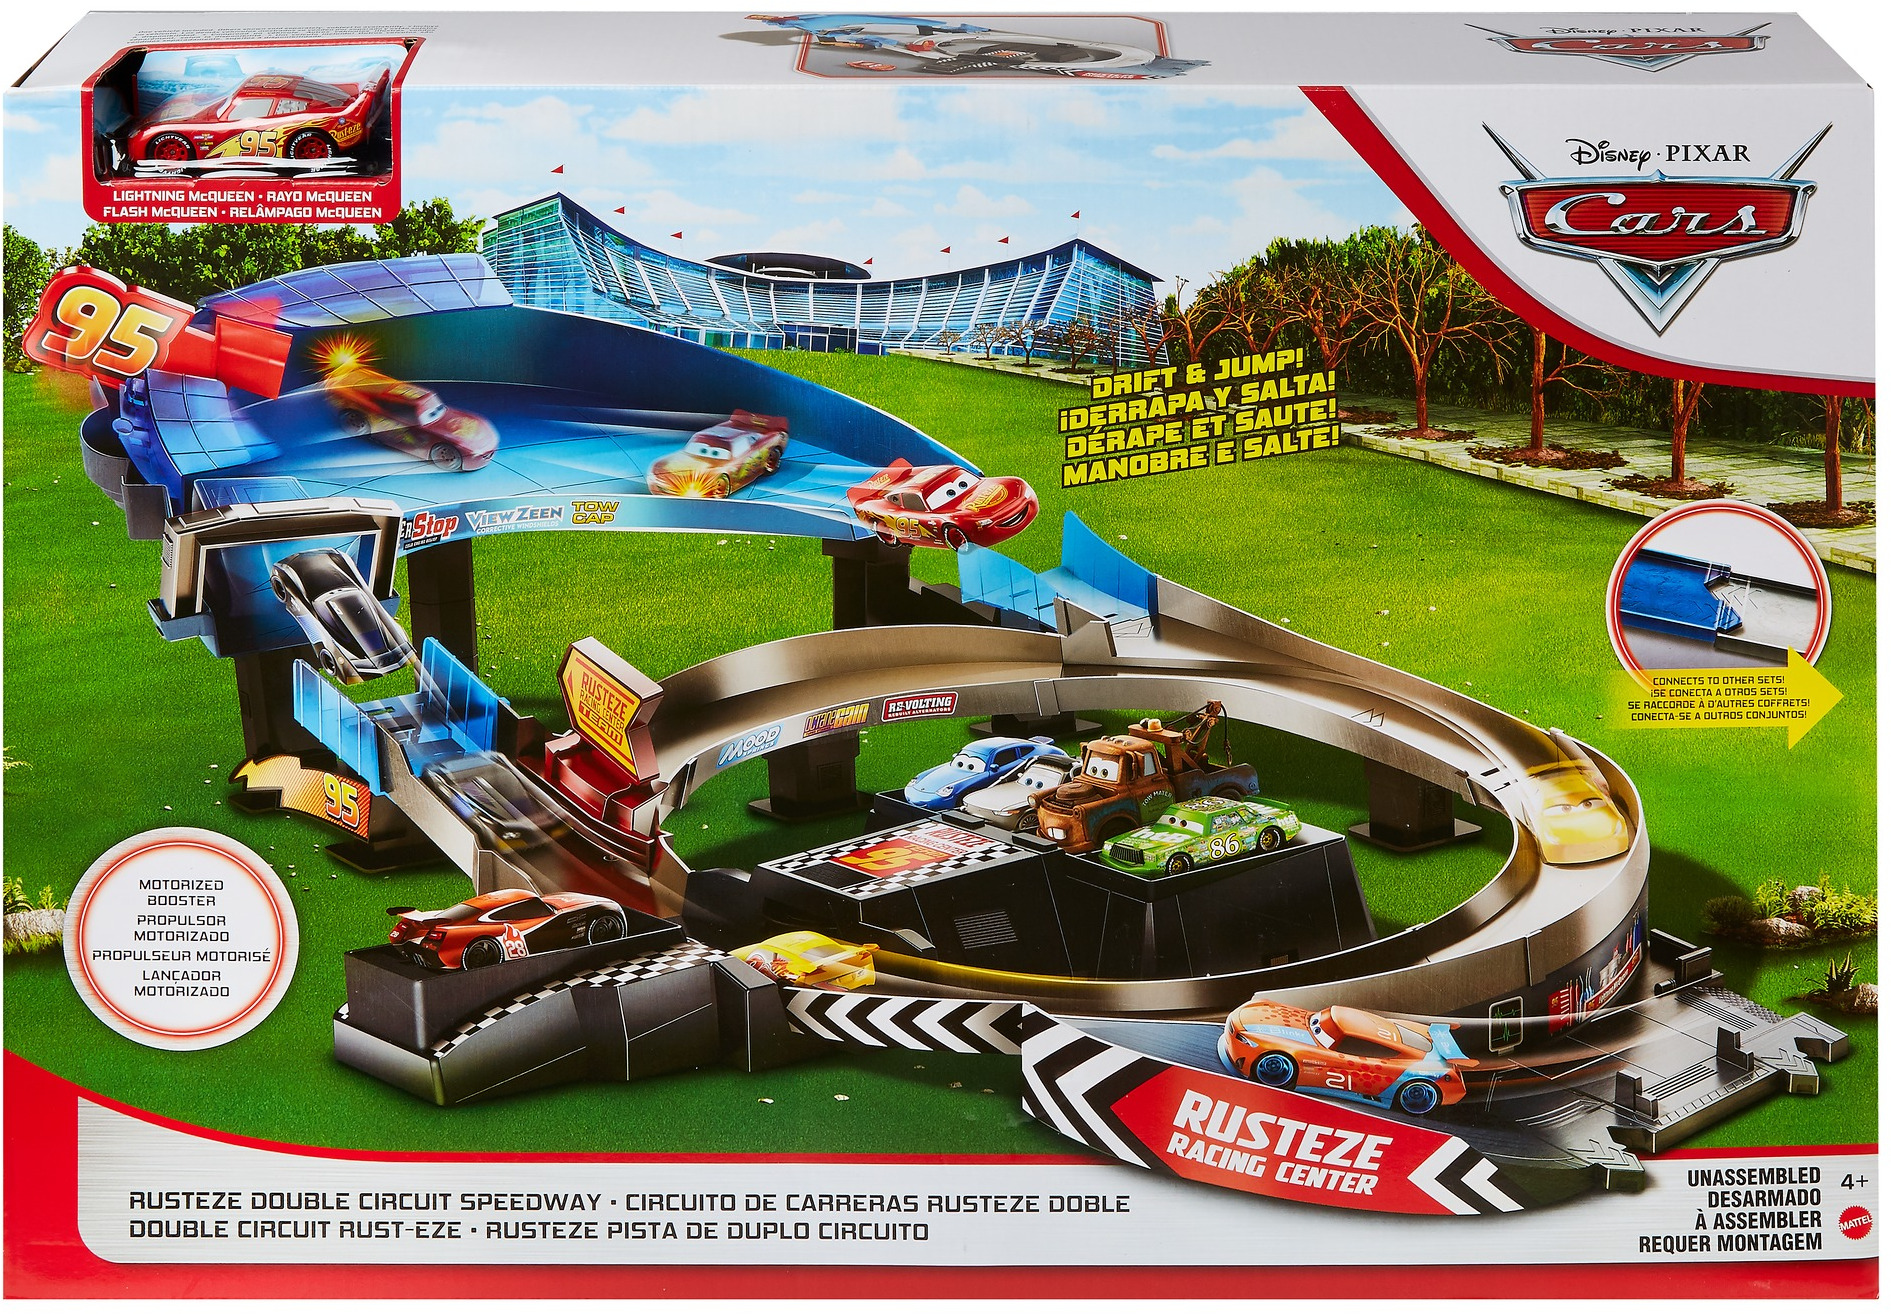 Disney Pixar Cars Rusteze Double Circuit Speedway Playset with Lightning McQueen Toy Car - image 5 of 7